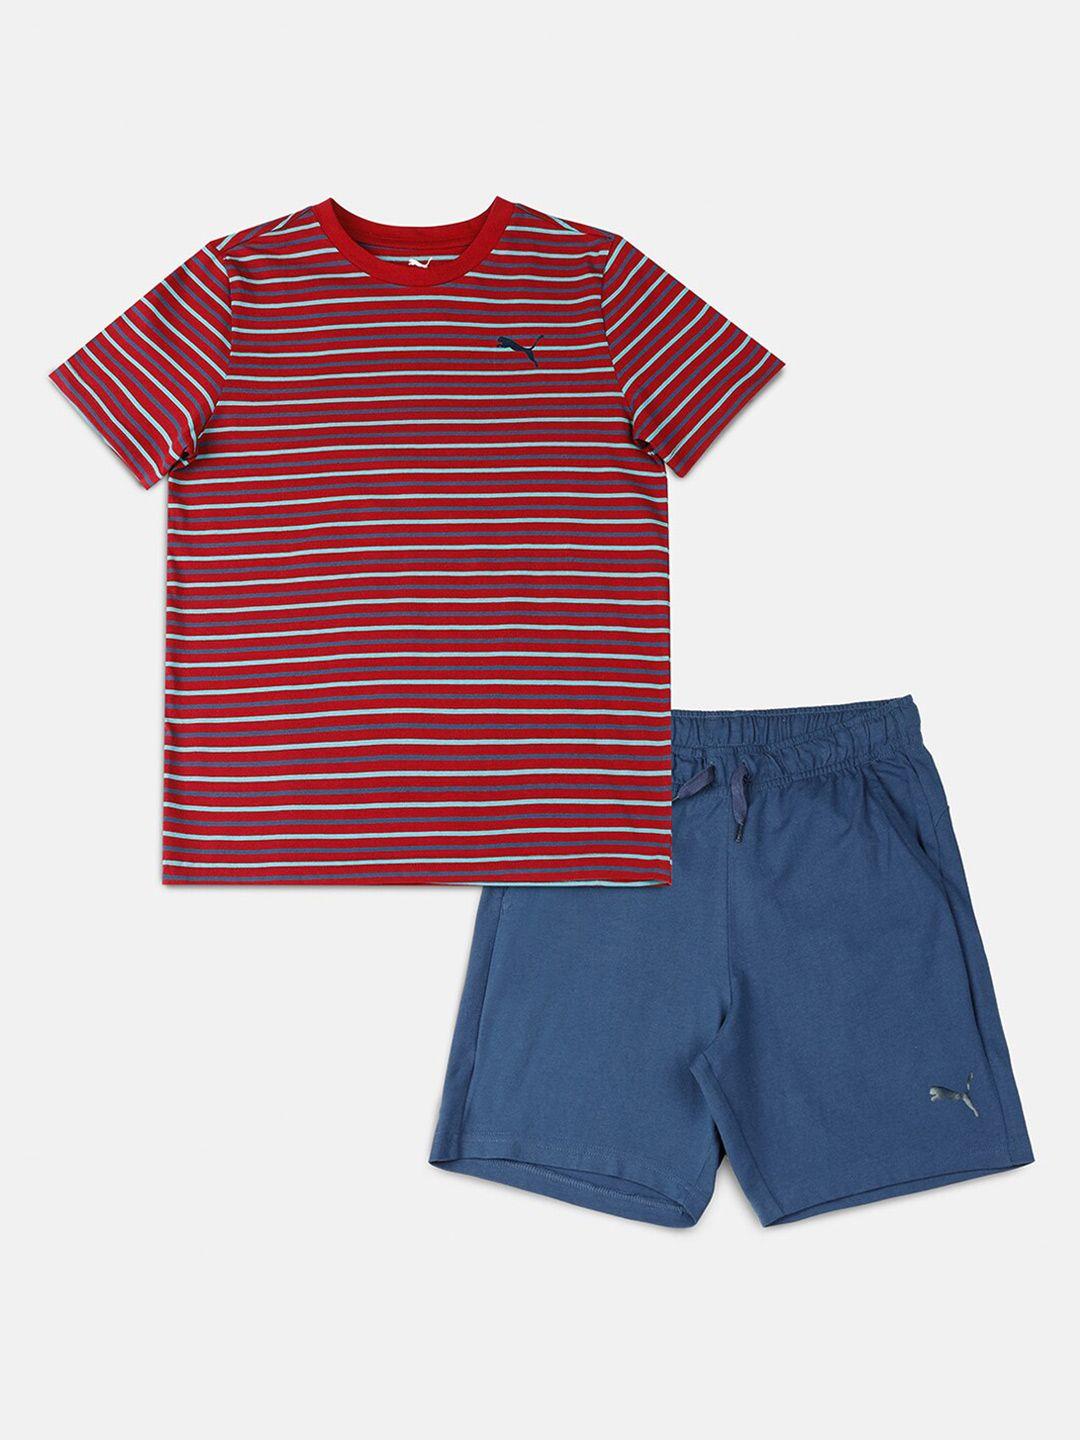 puma-boys-red-t-shirt+jogger-clothing-set